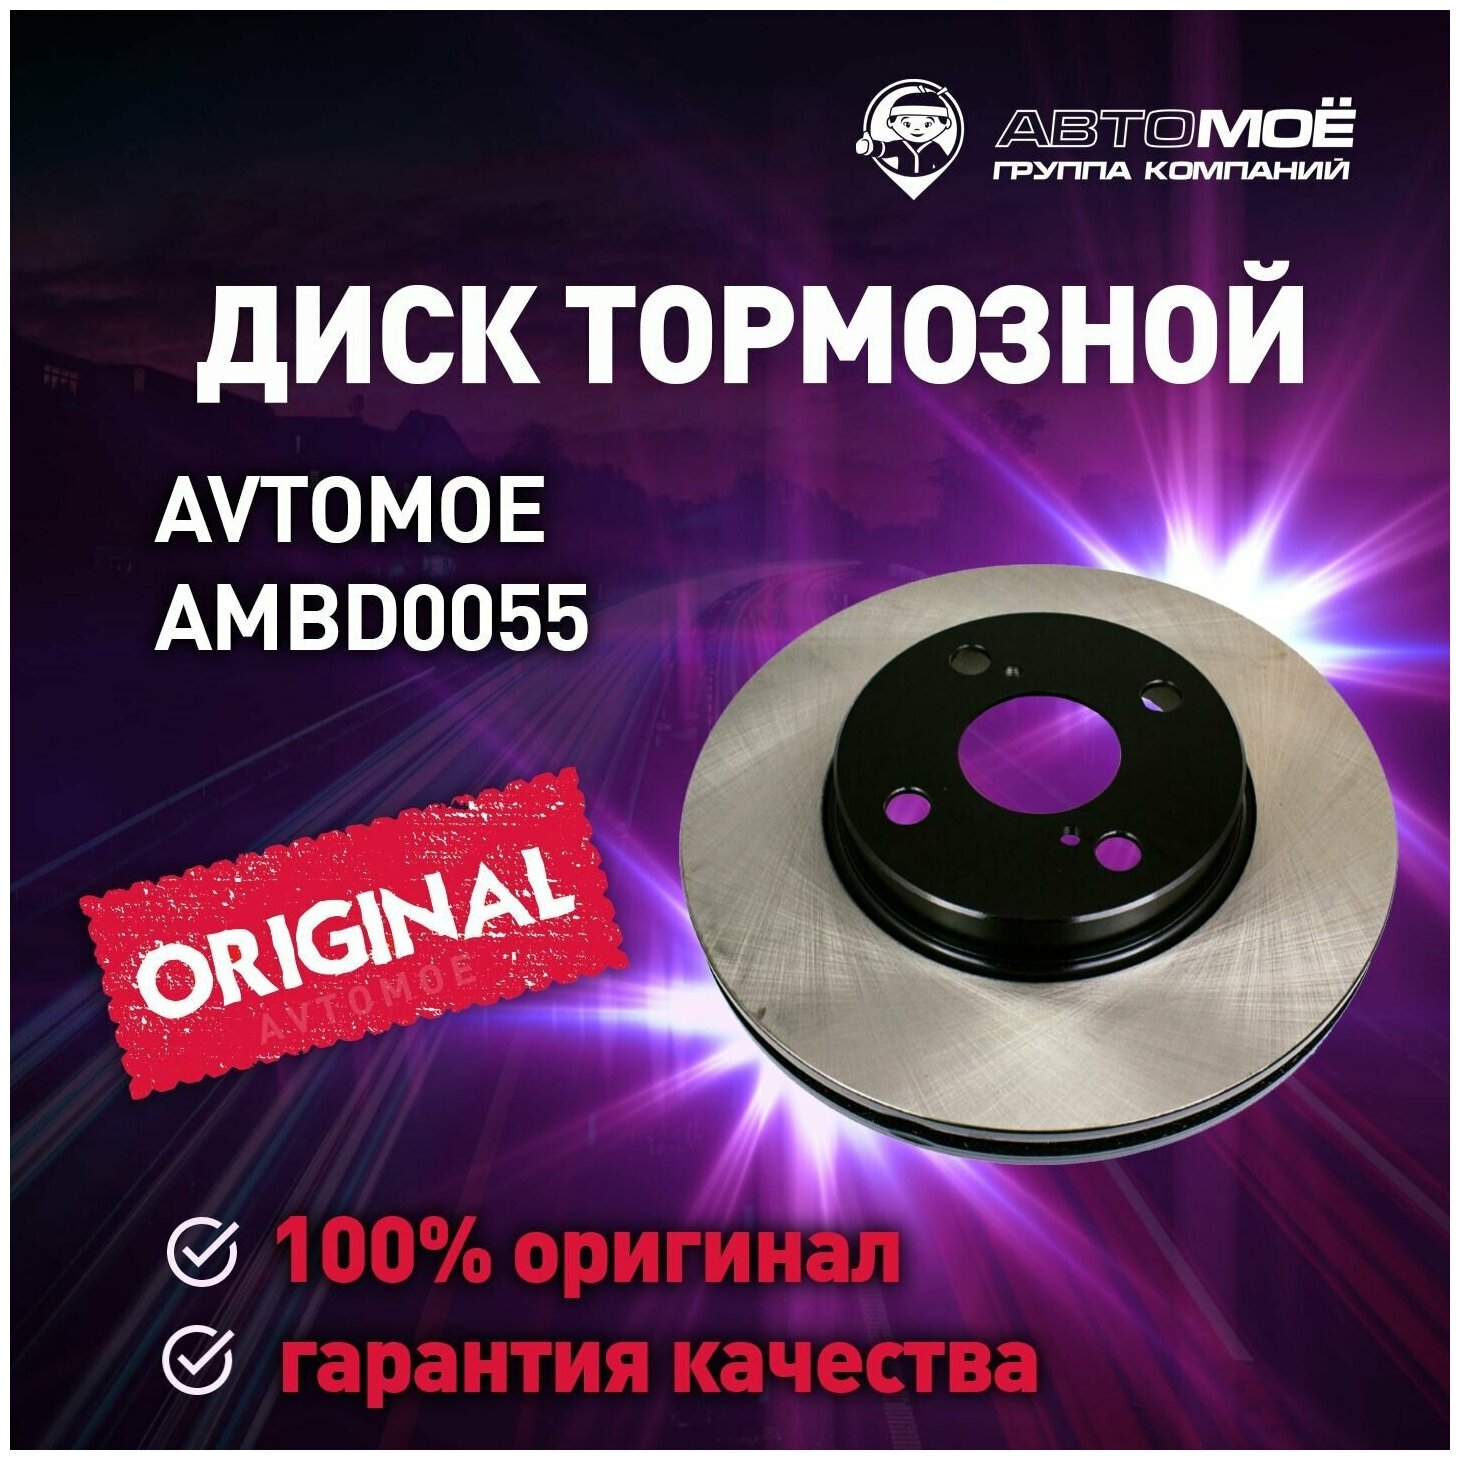 Диск тормозной передний AMBD0055 Avtomoe для Kia Shuma Spectra / Автомое для Киа Шума Спектра